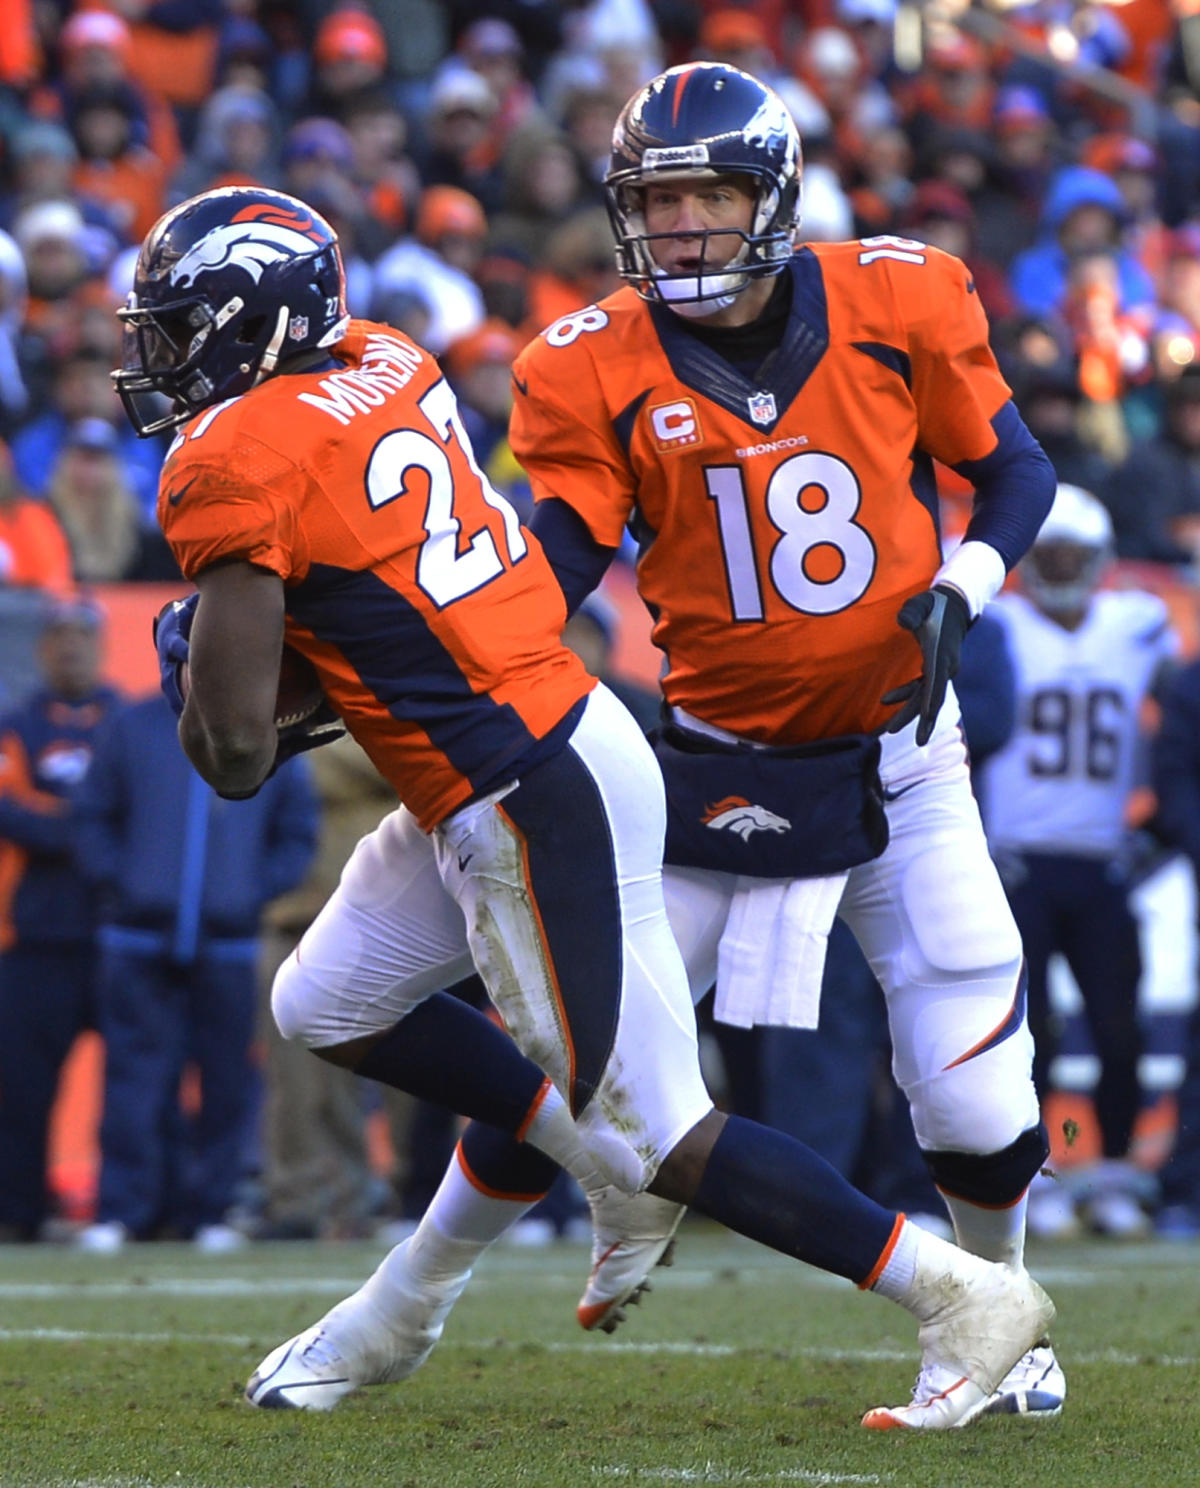 2014 NFL playoffs, Chargers vs. Broncos: Peyton Manning, Denver